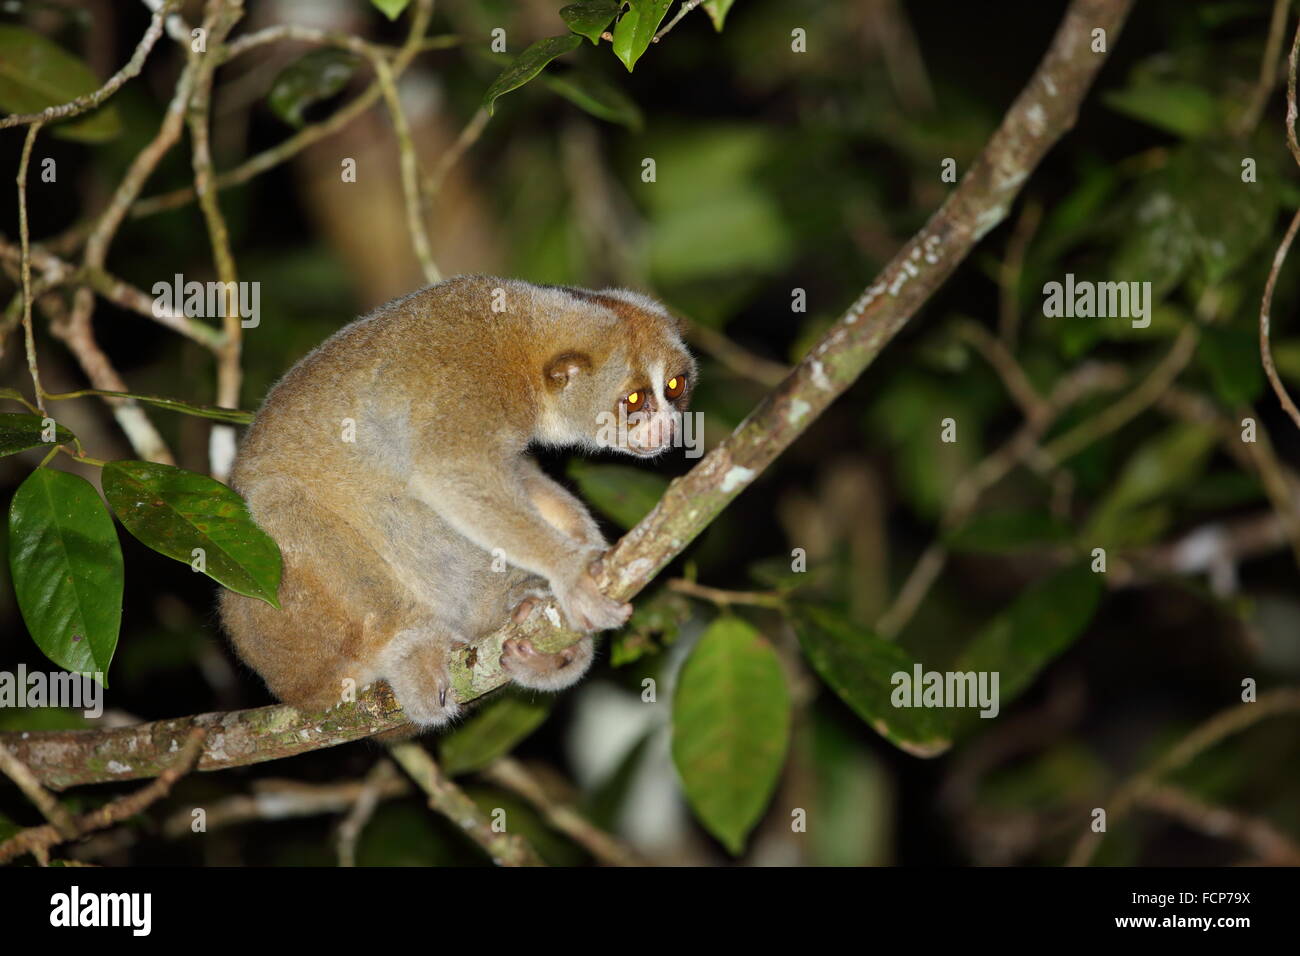 Sunda Slow Loris (Nycticebus Coucang) in Thailand Stockfotografie - Alamy